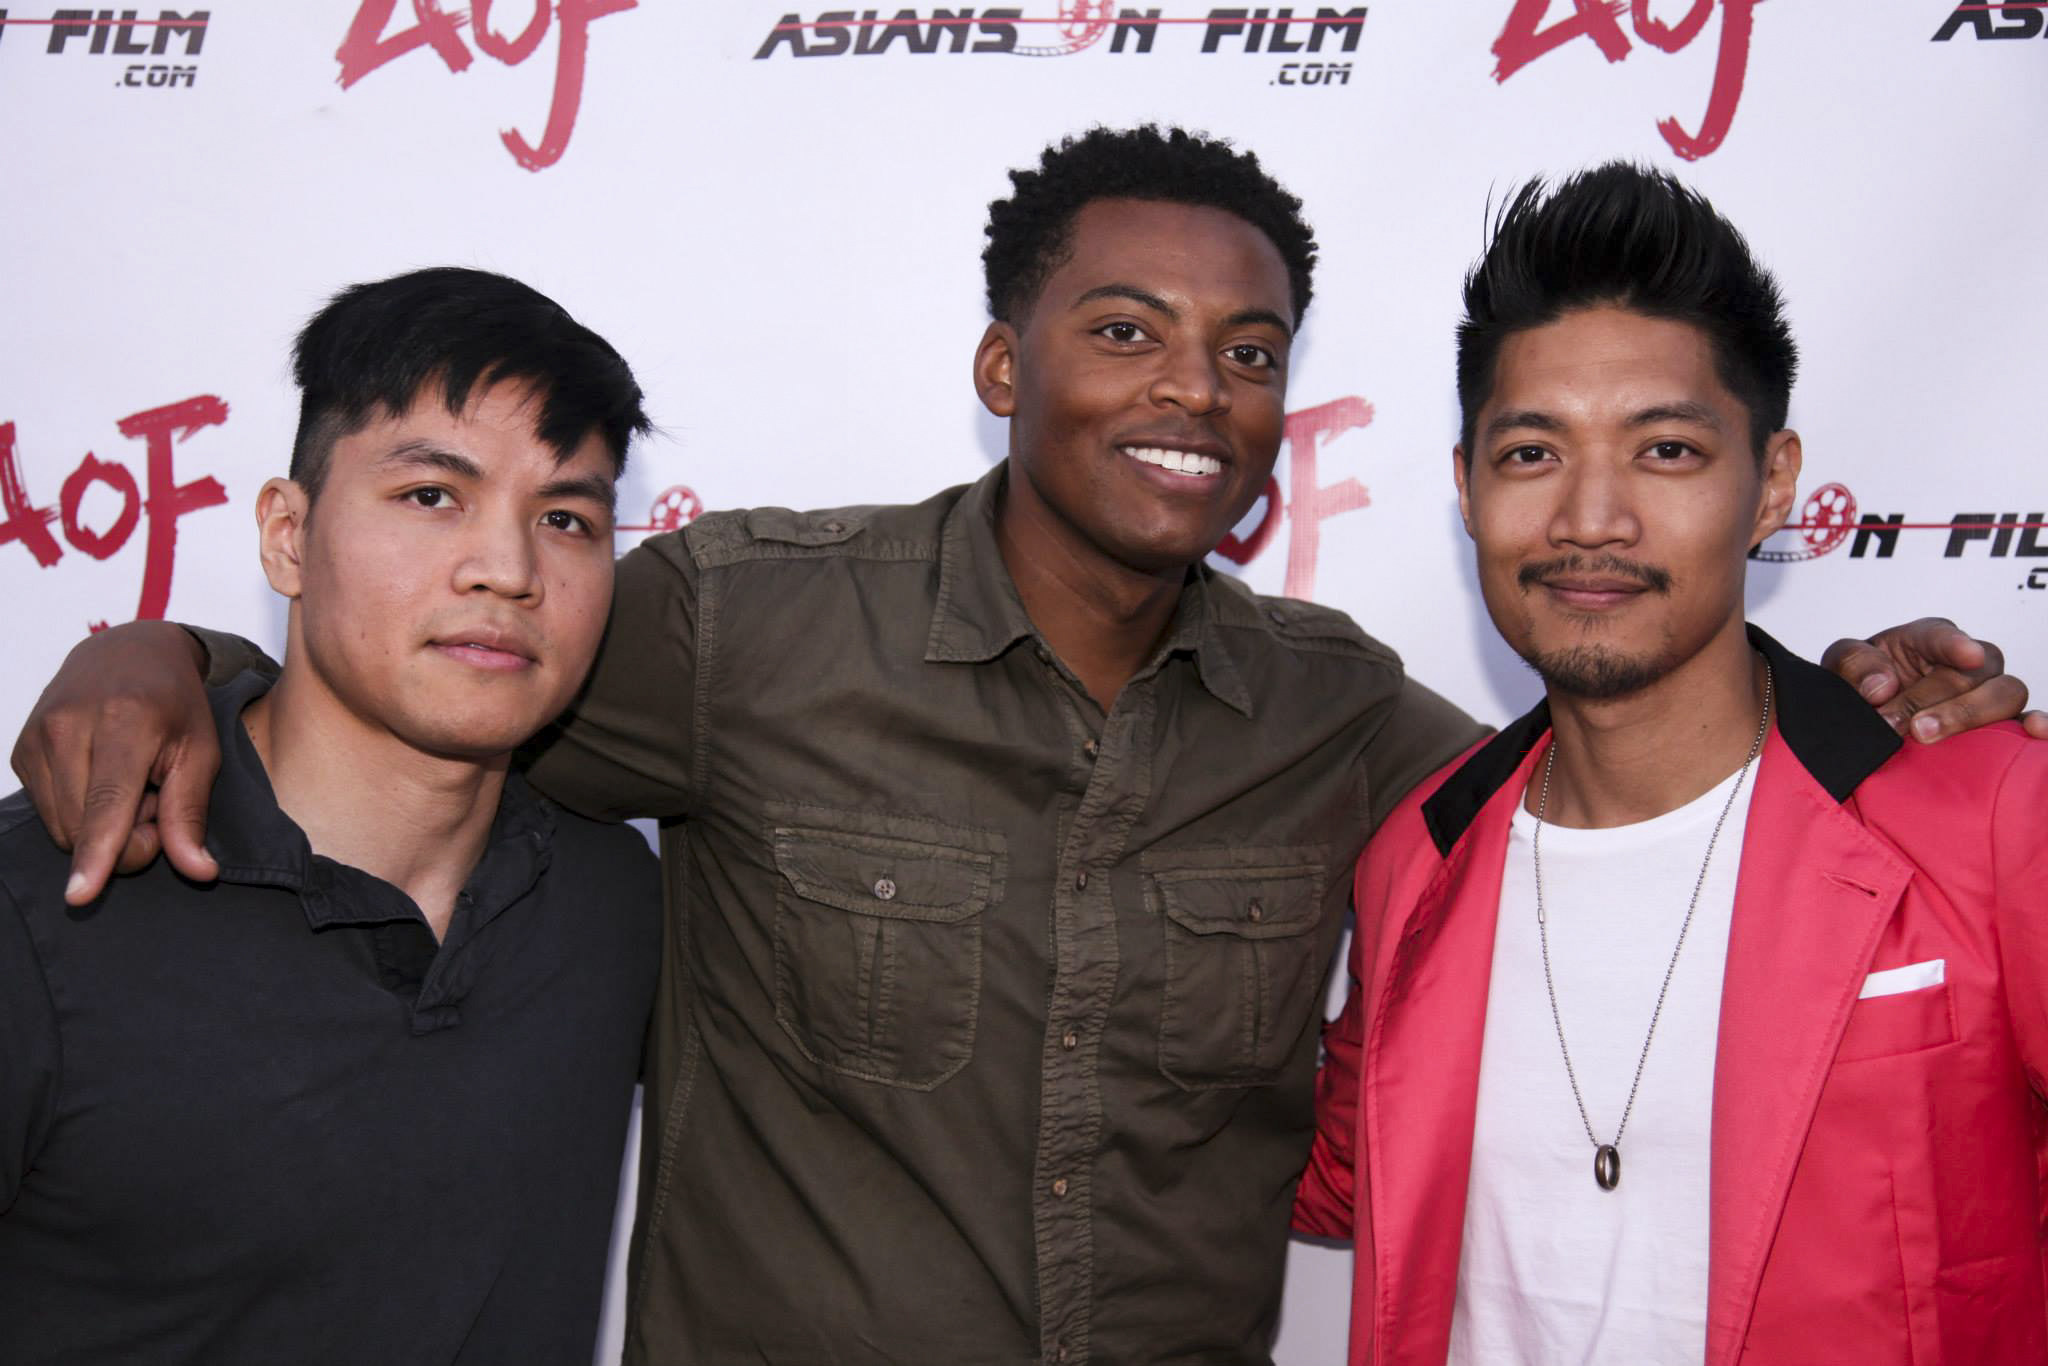 Asians On Film Festival 2015 with Francois D, Thurston Cherry, and Davis Noir.